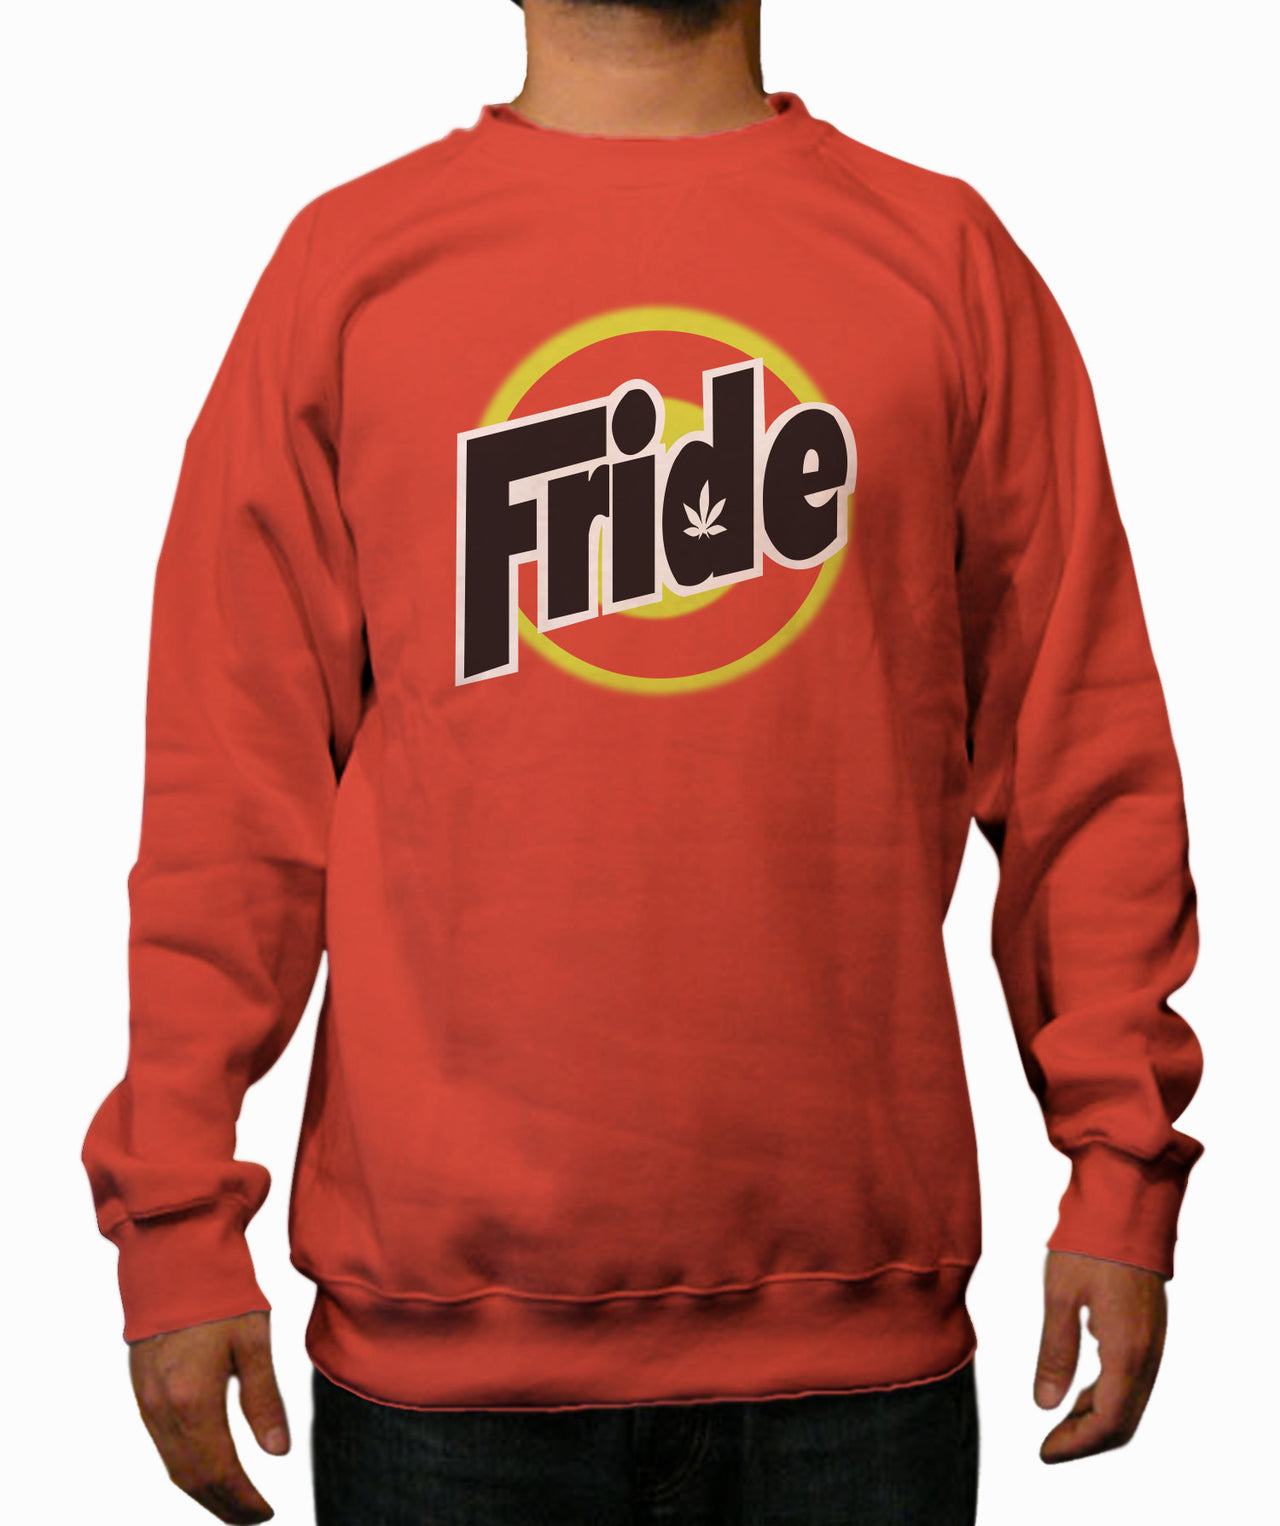 Fride orange Crewneck Sweatshirt - TshirtNow.net - 1